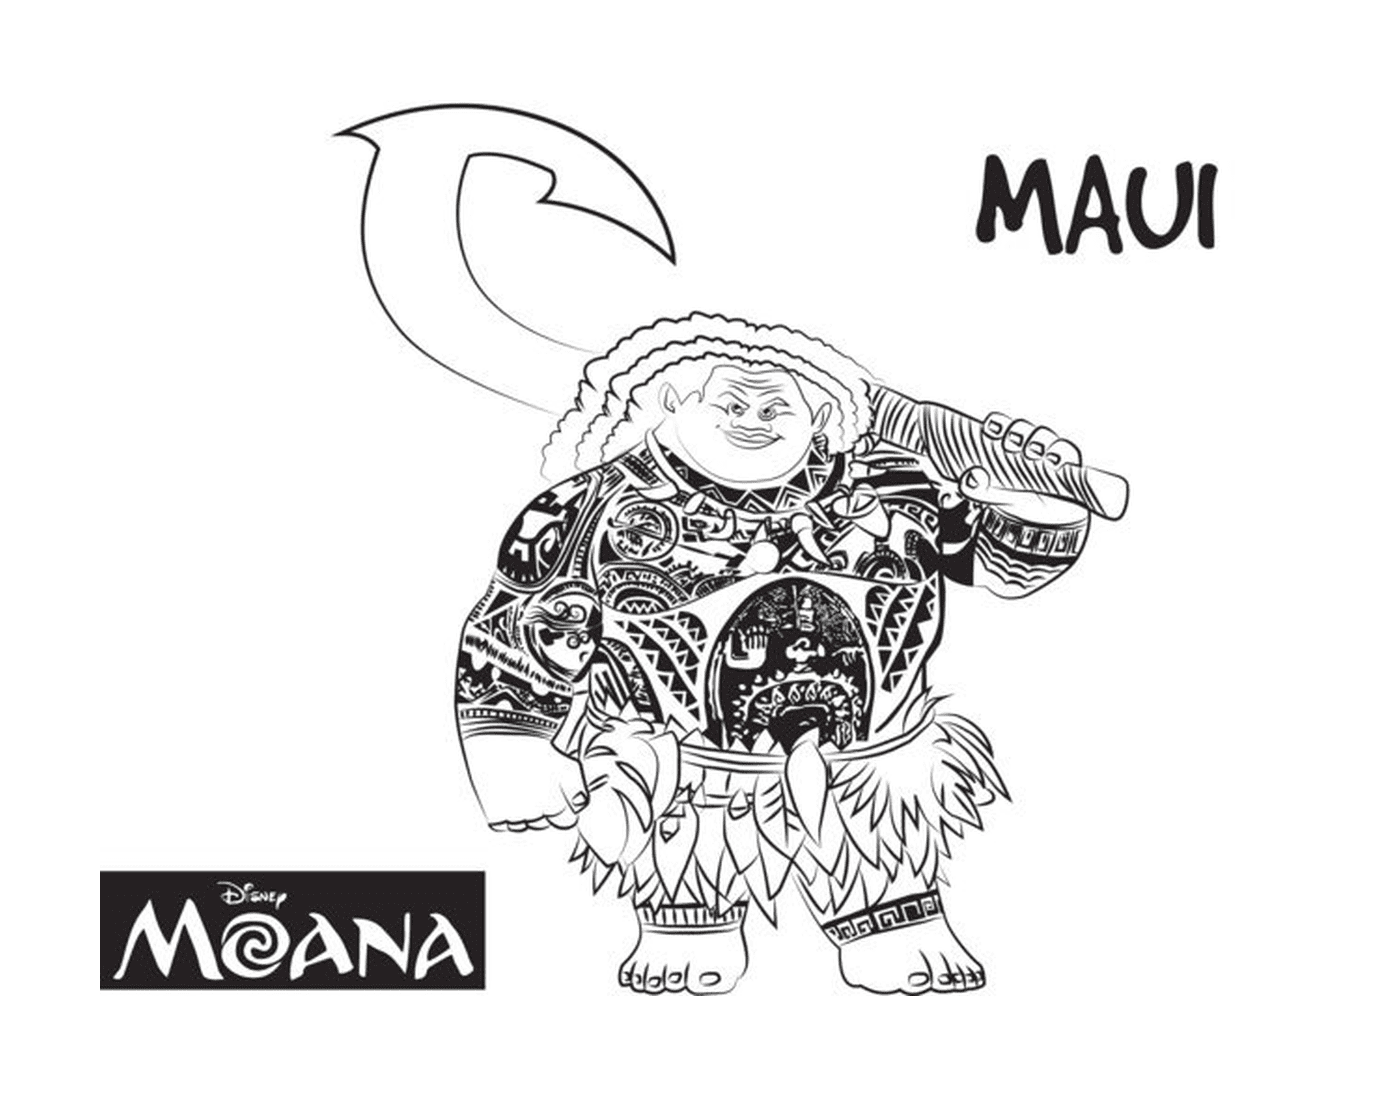  Maui, strongman of Moana 